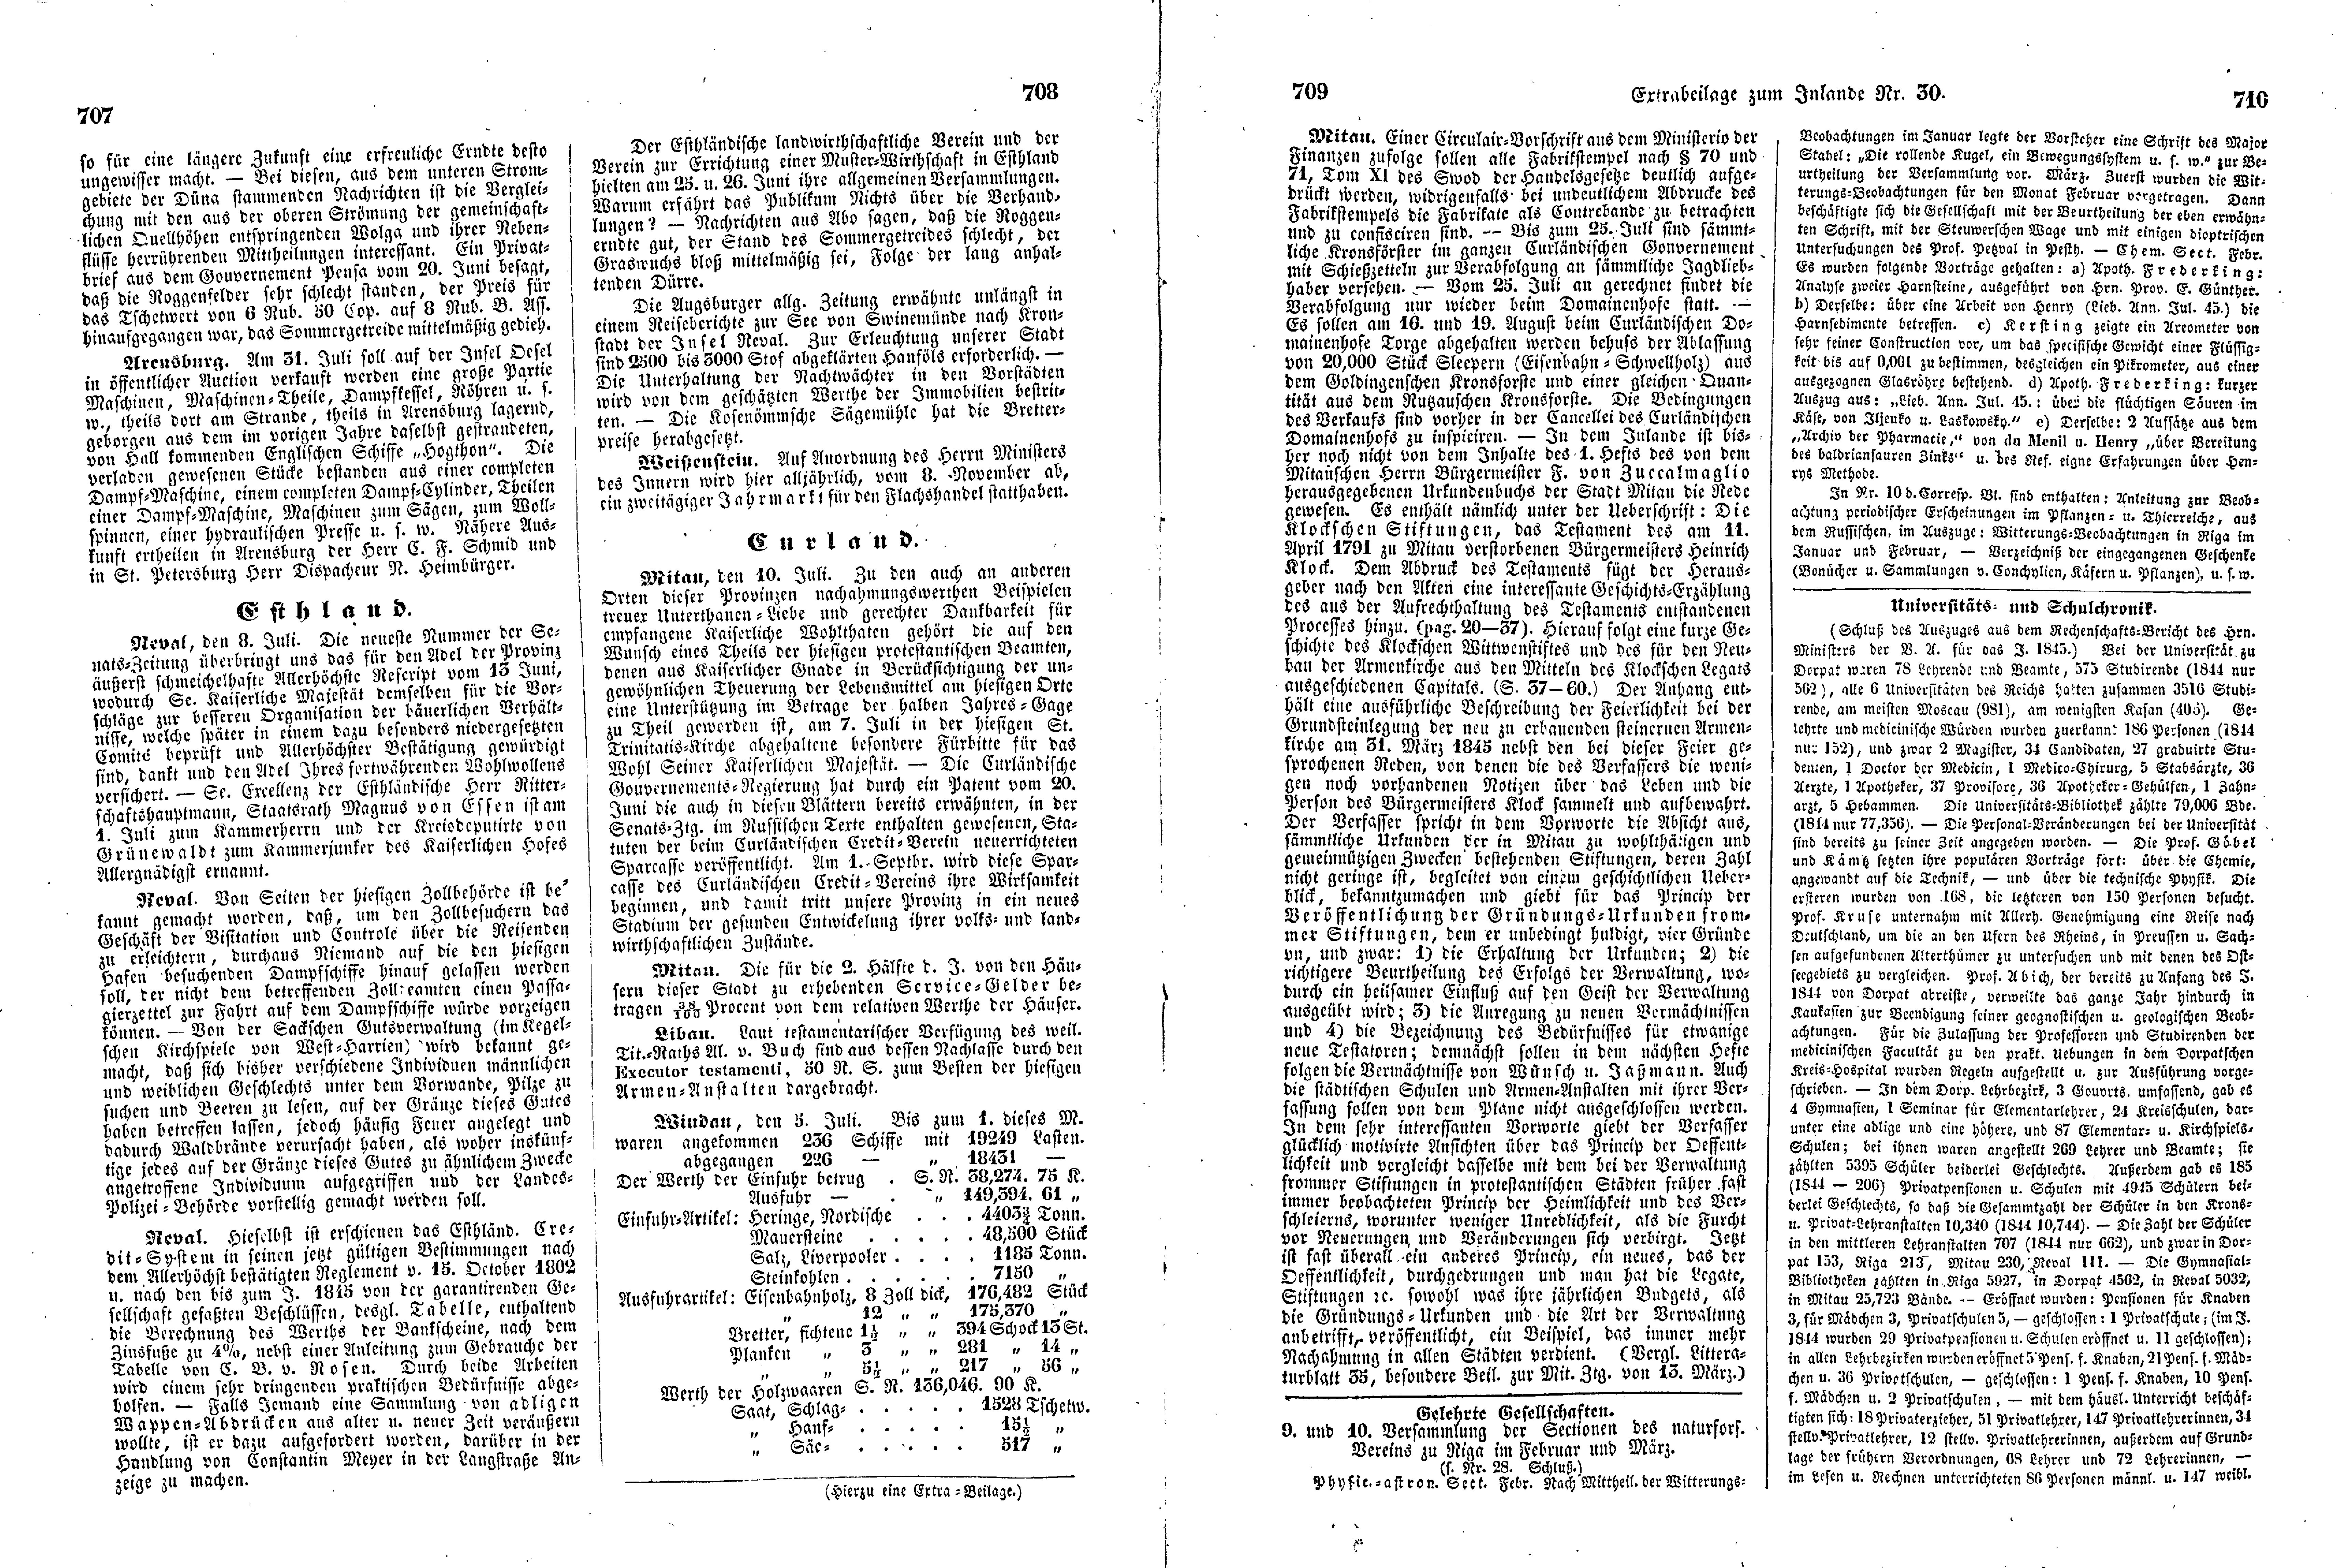 Das Inland [11] (1846) | 182. (707-710) Main body of text